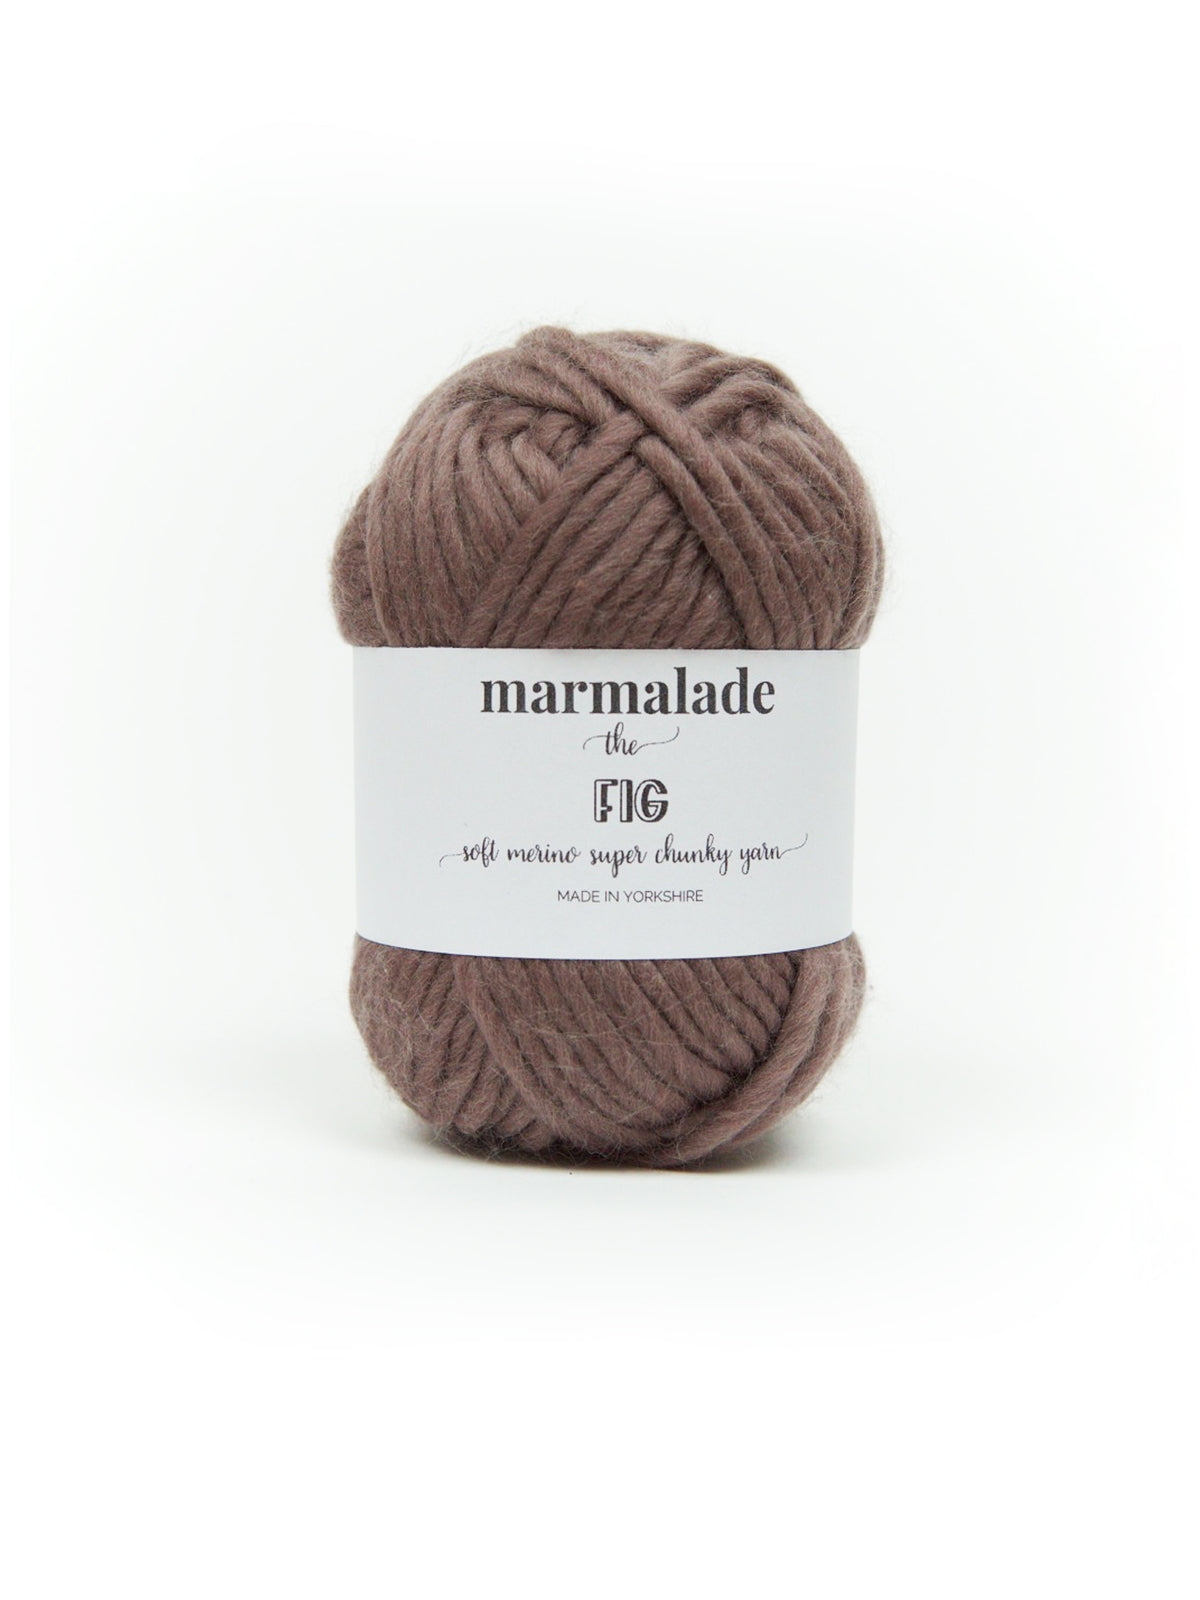 fig brown merino super chunky yarn from marmalade